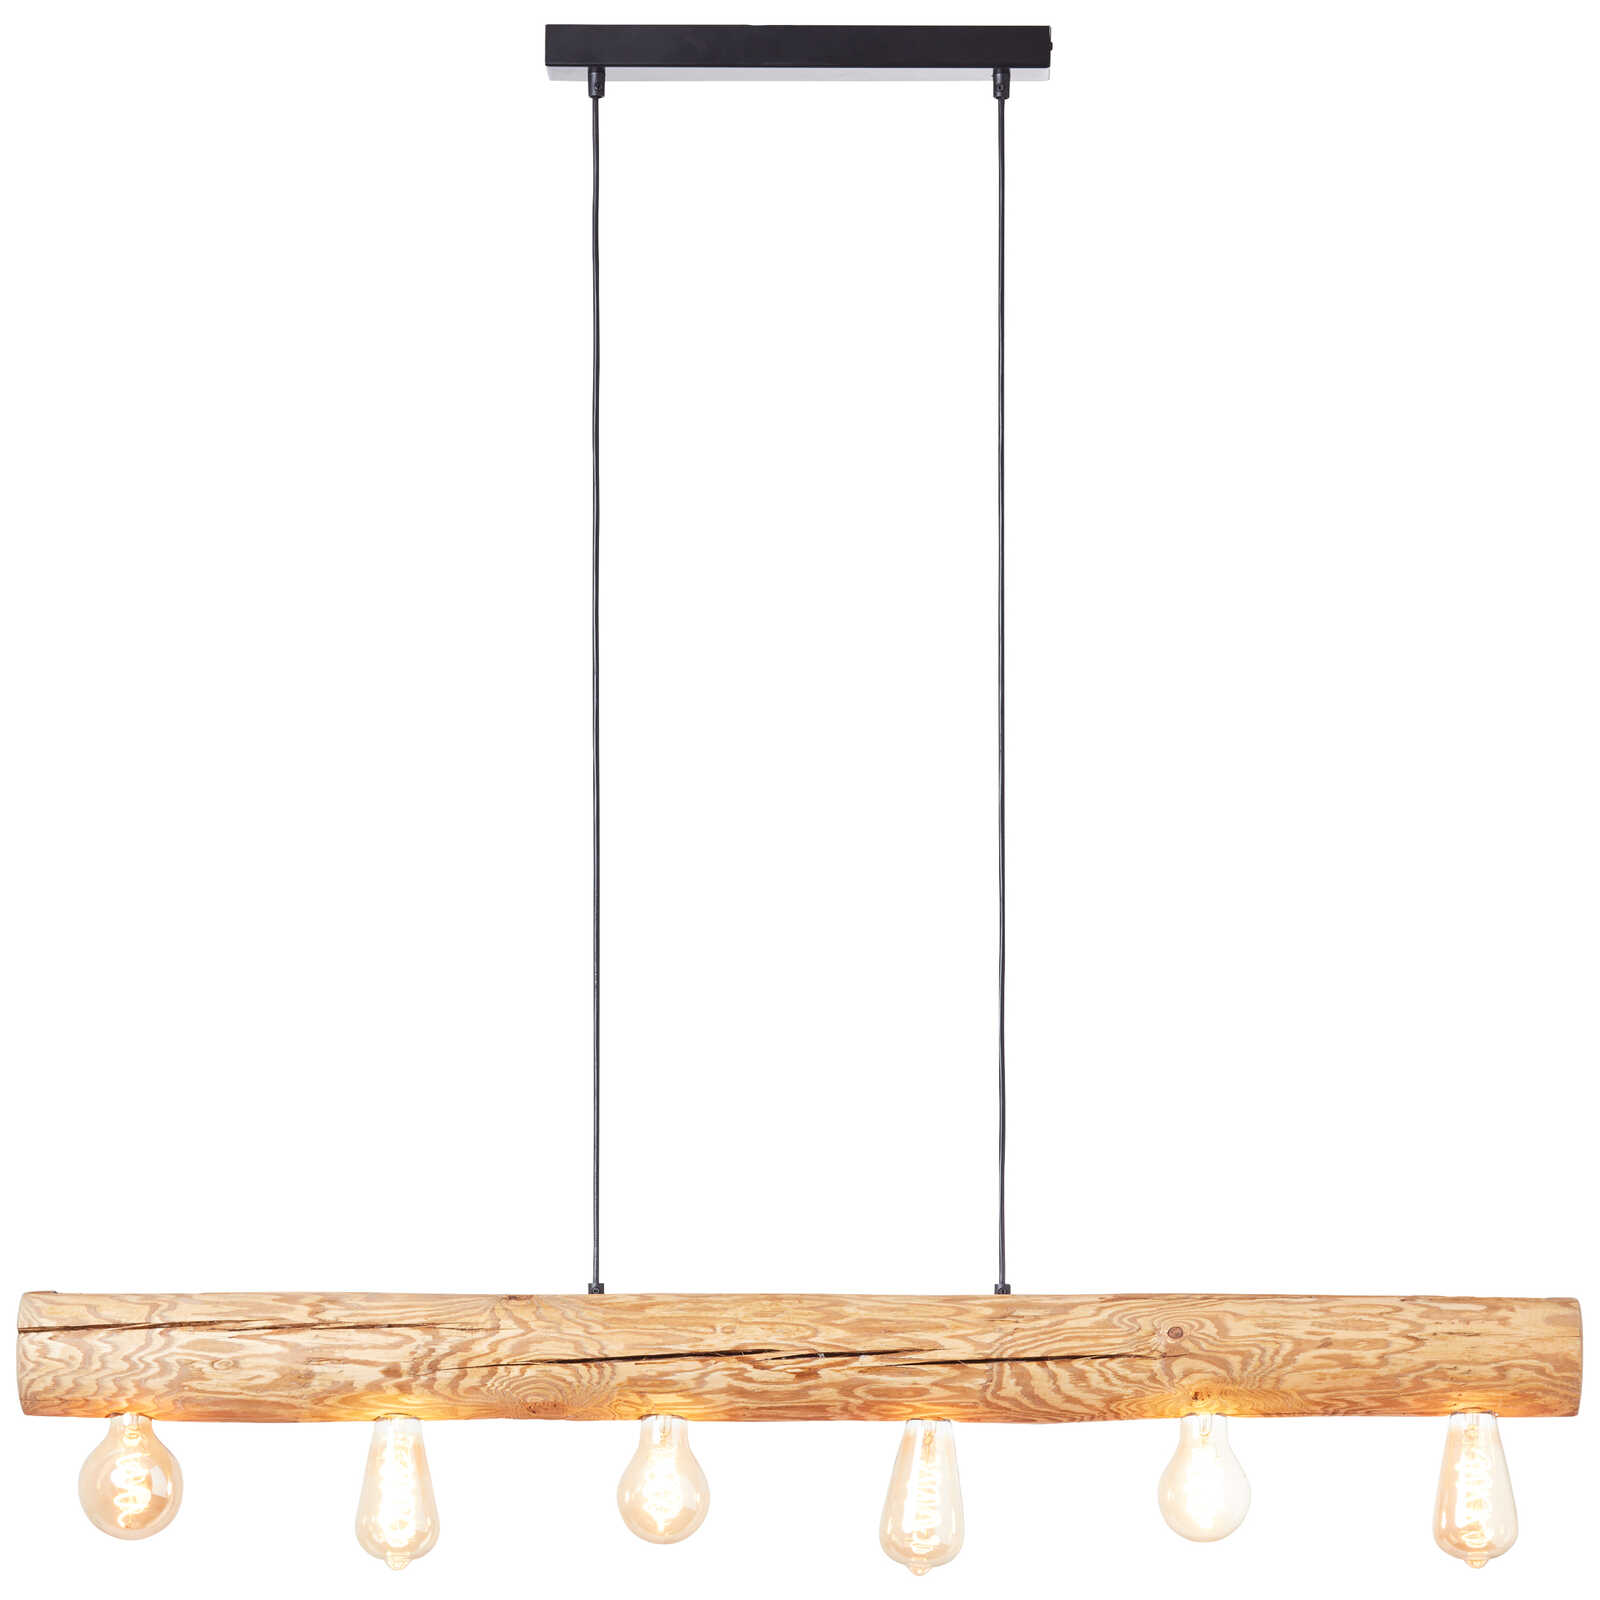             Houten hanglamp - Samuel 2 - Bruin
        